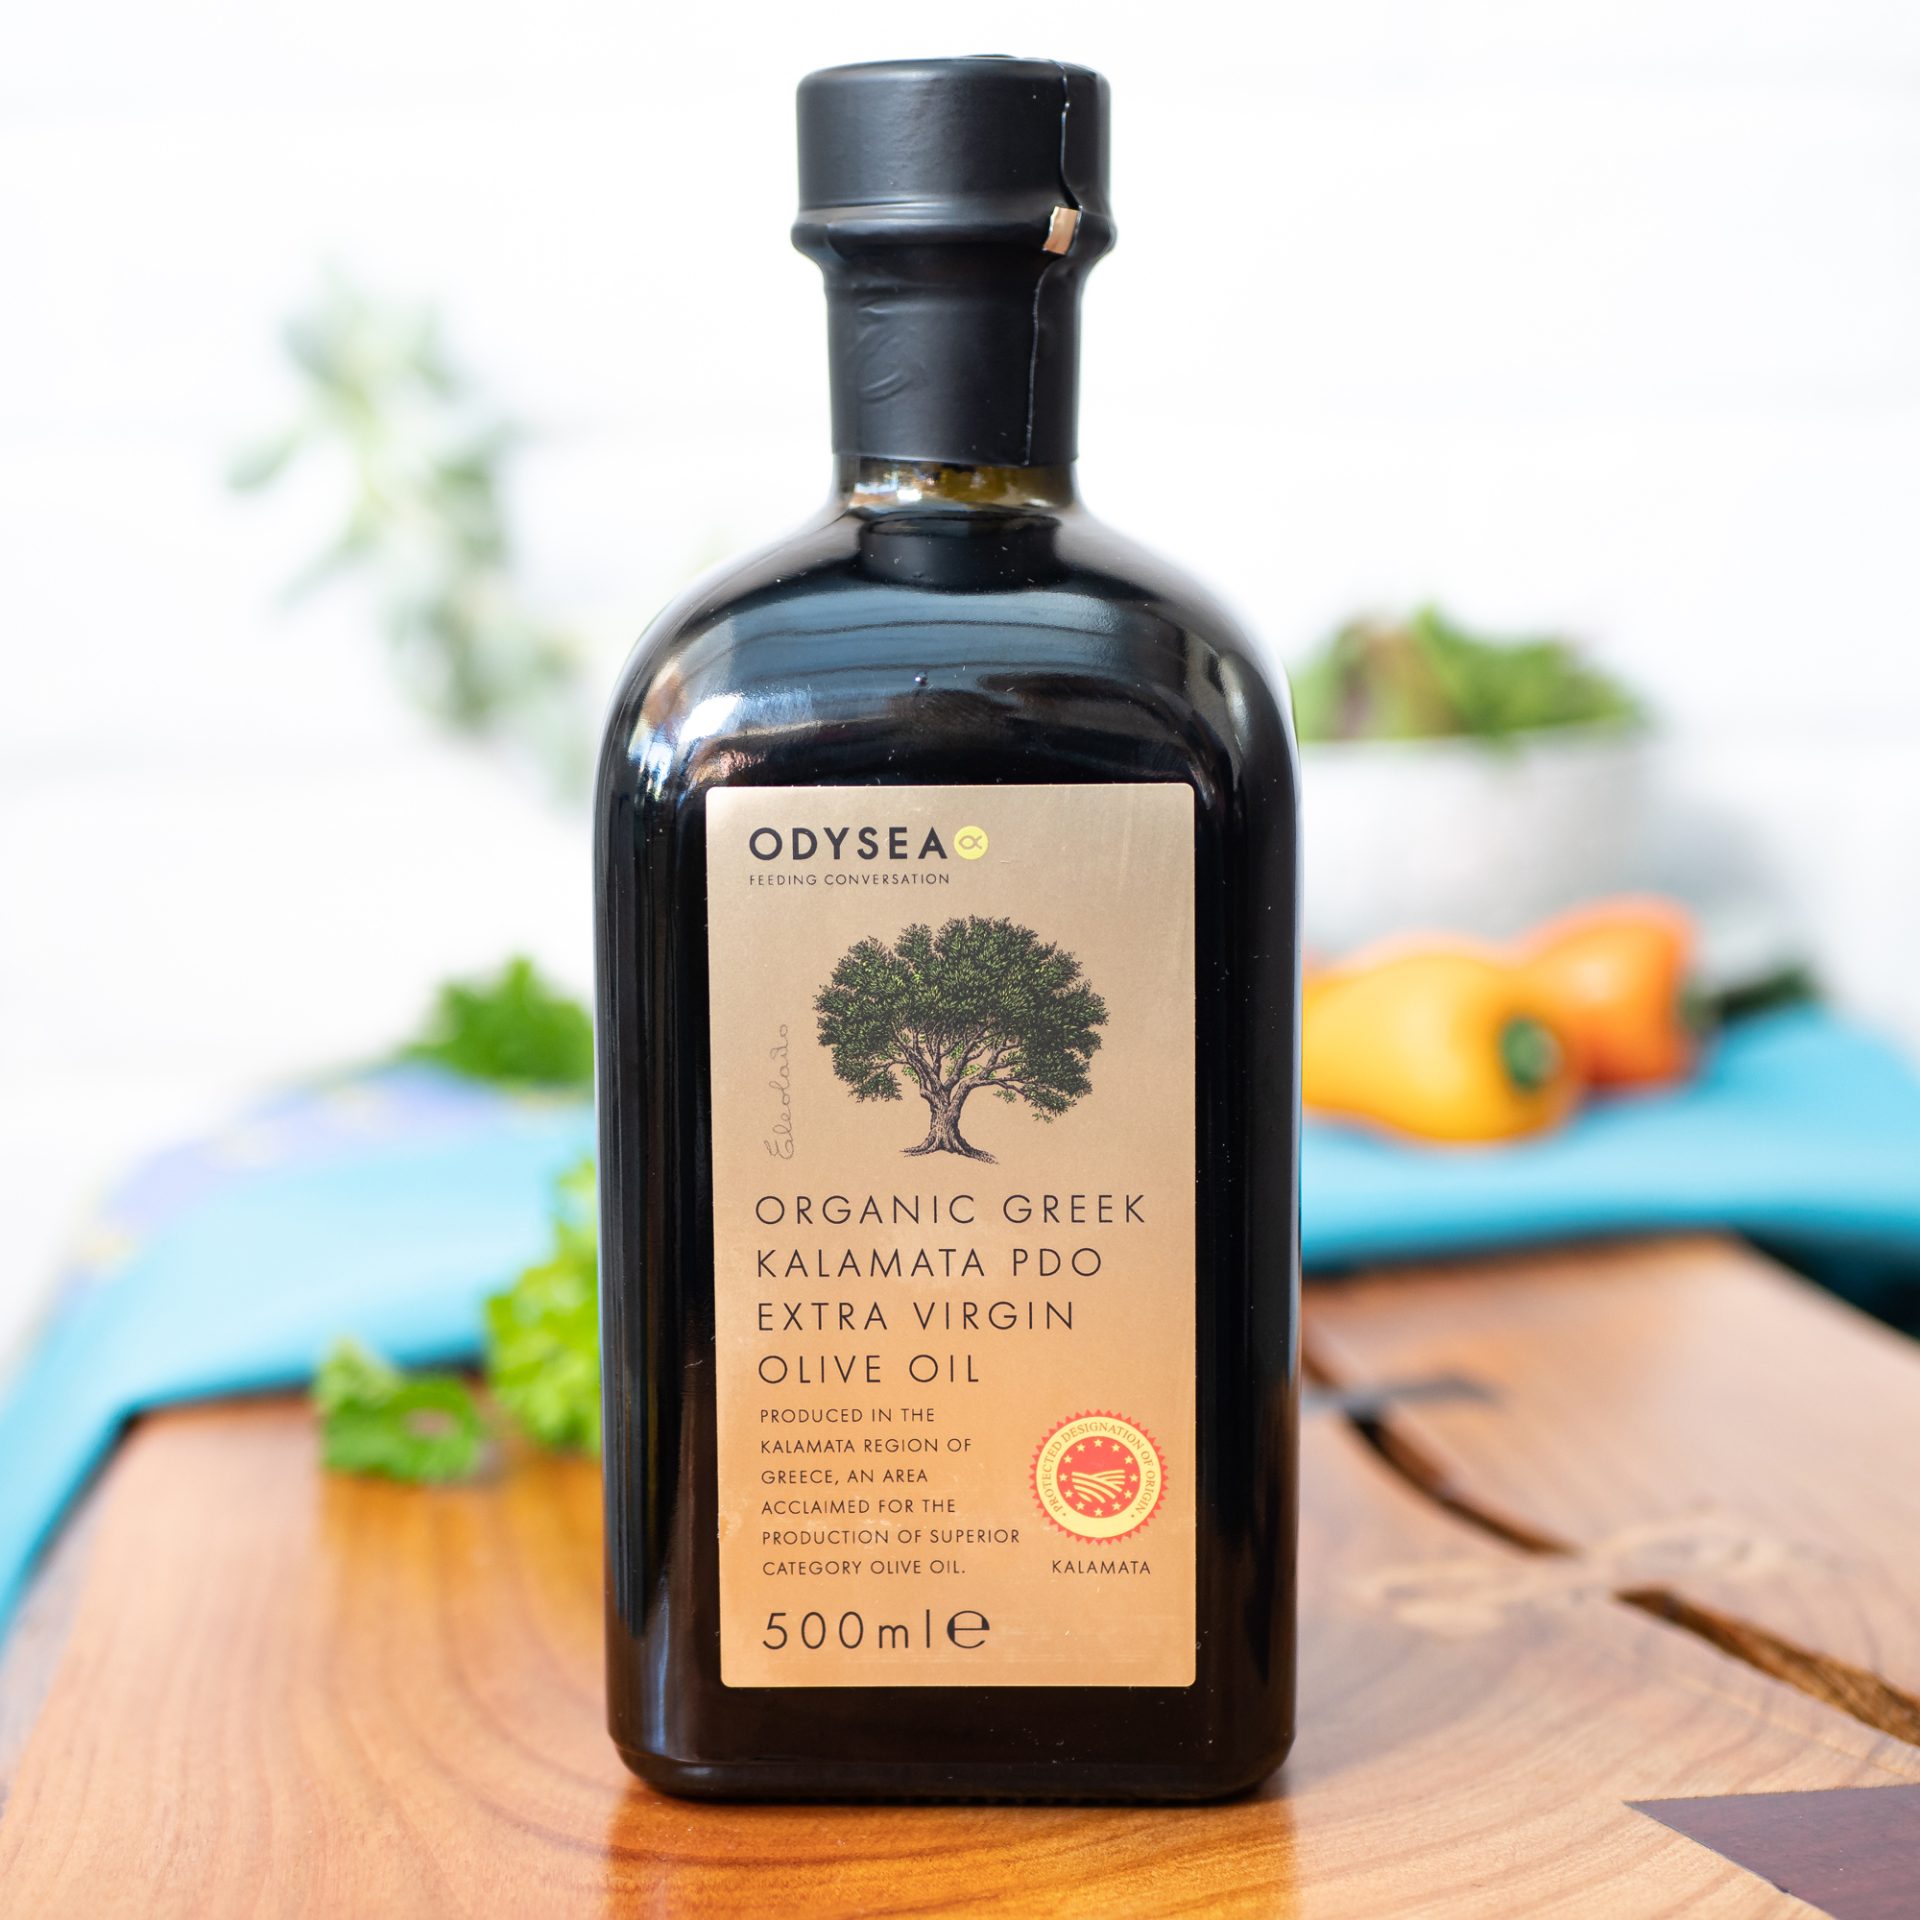 Odysea Organic Greek Kalamata PDO Extra Virgin Olive Oil (500ml) The